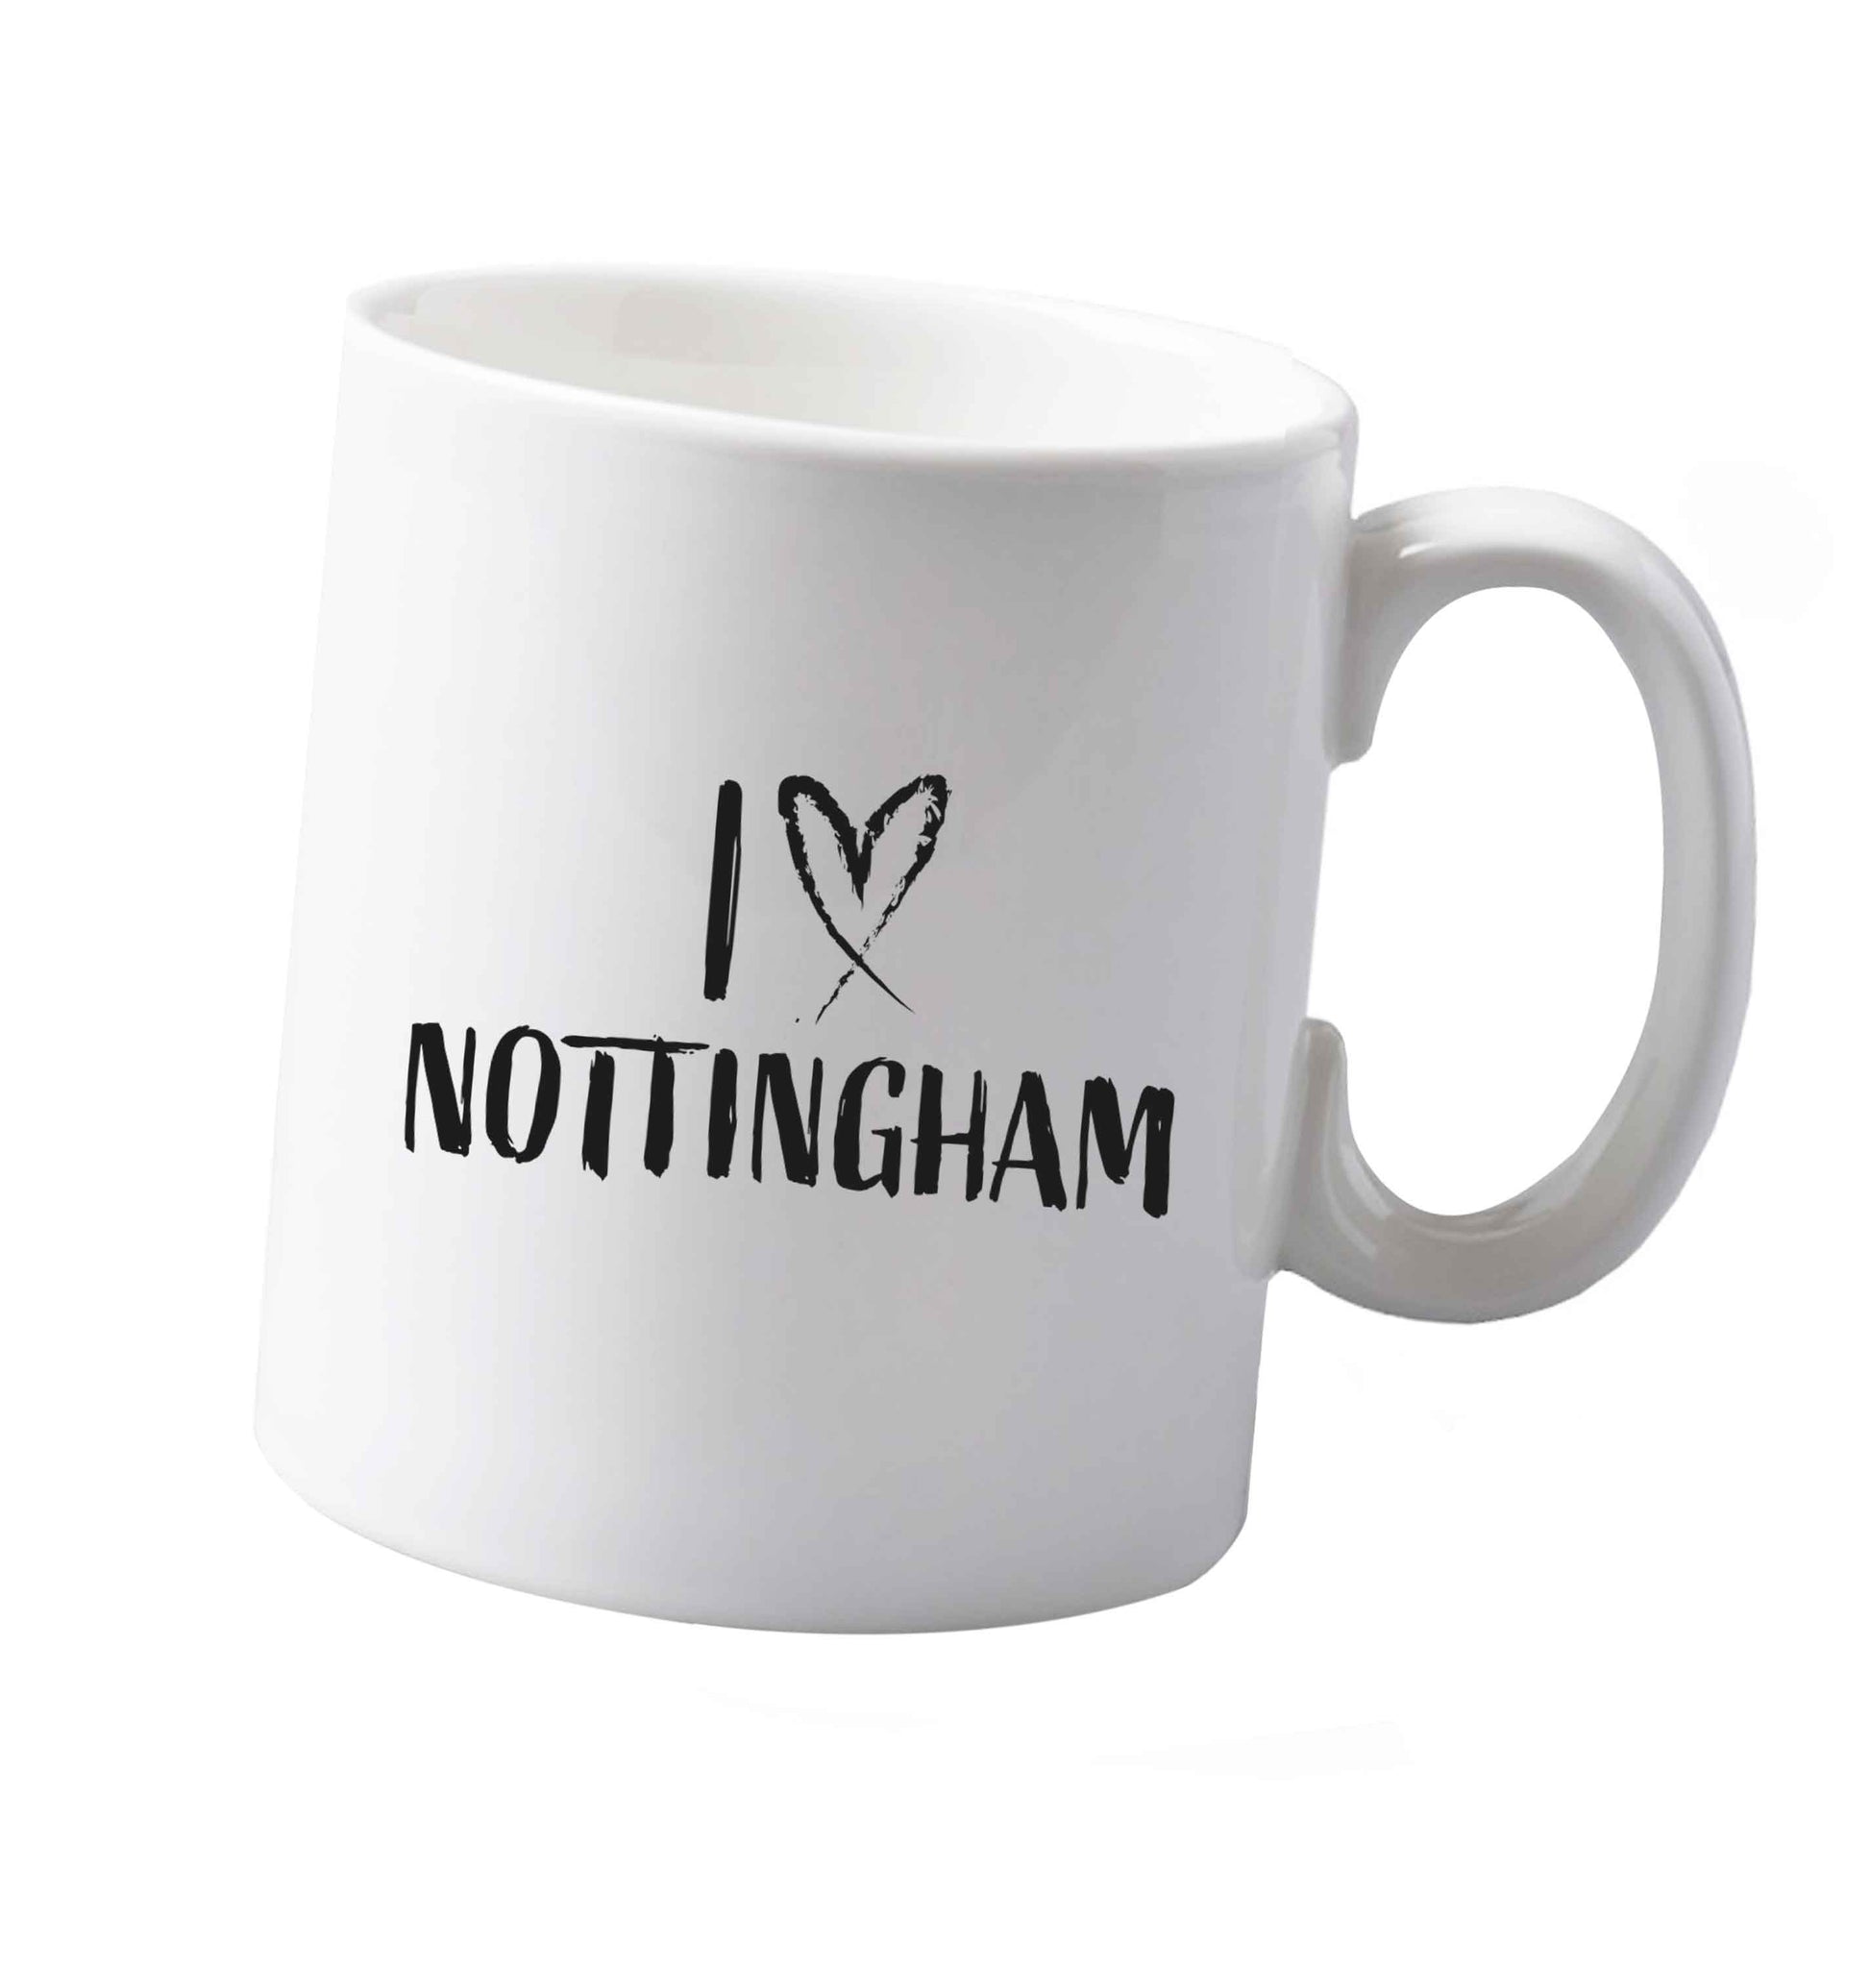 10 oz I love Nottingham ceramic mug both sides